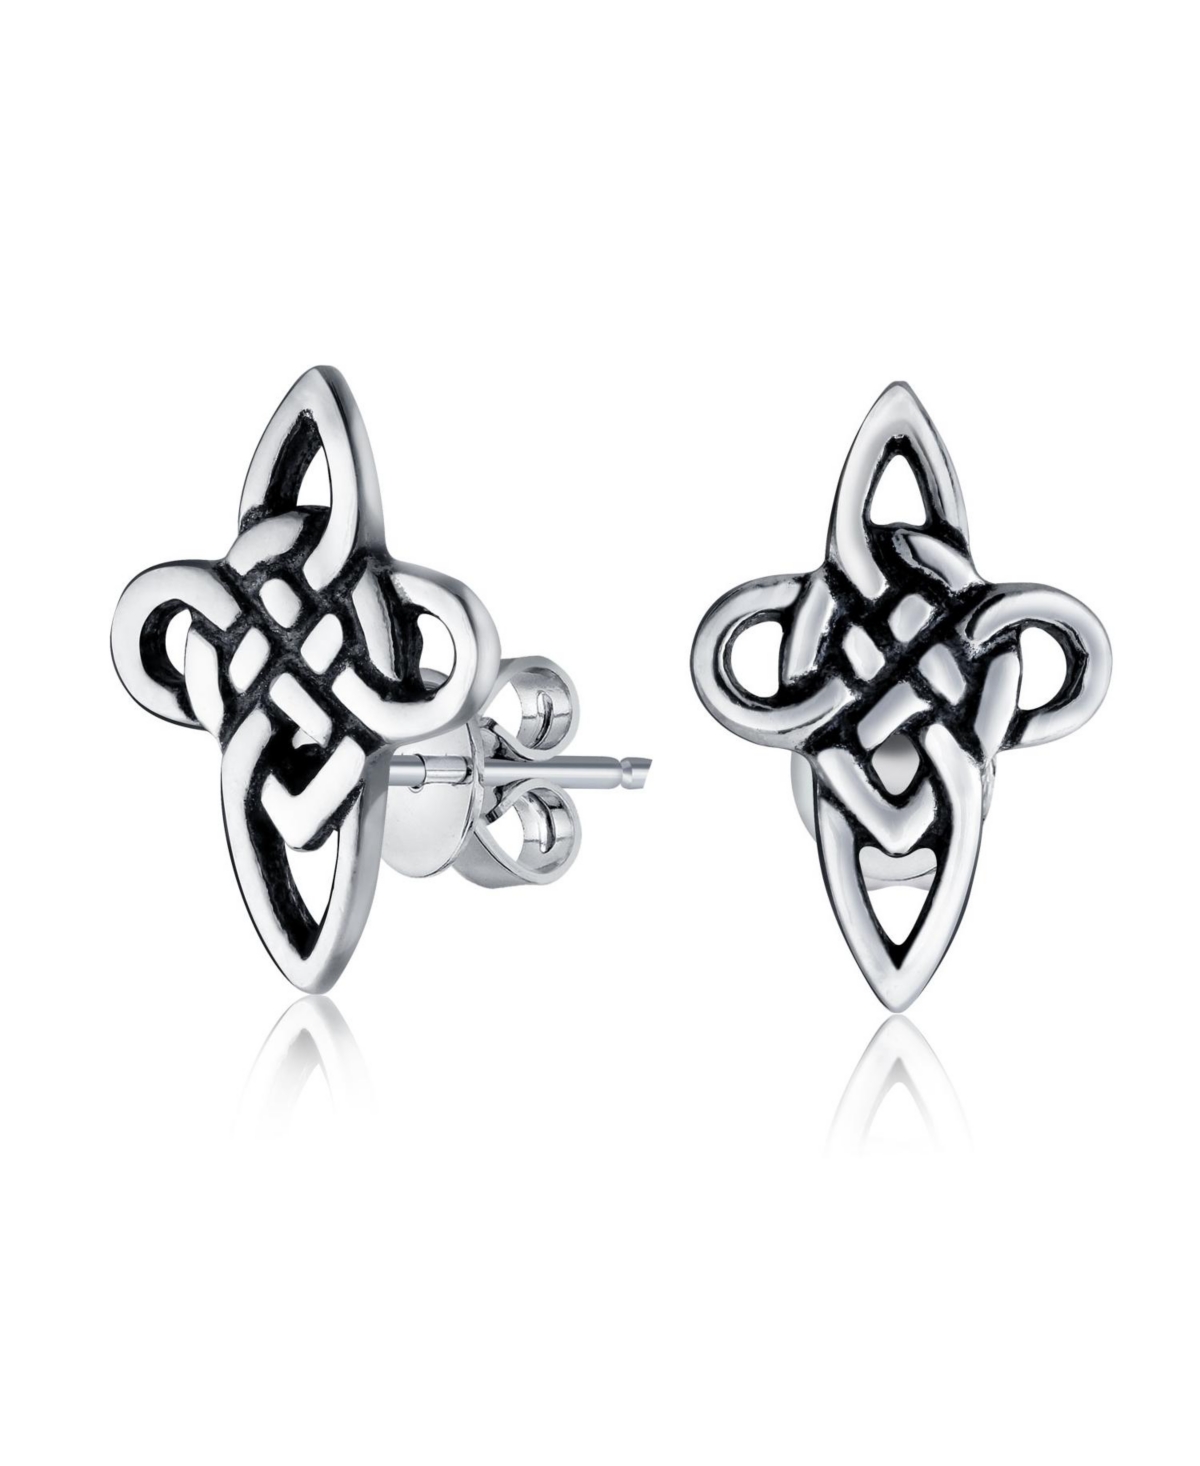 Unisex Religious Irish Infinity Love Knot Celtic Cross Stud Earrings For Women Men Oxidized .925 Sterling Silver - Silver a